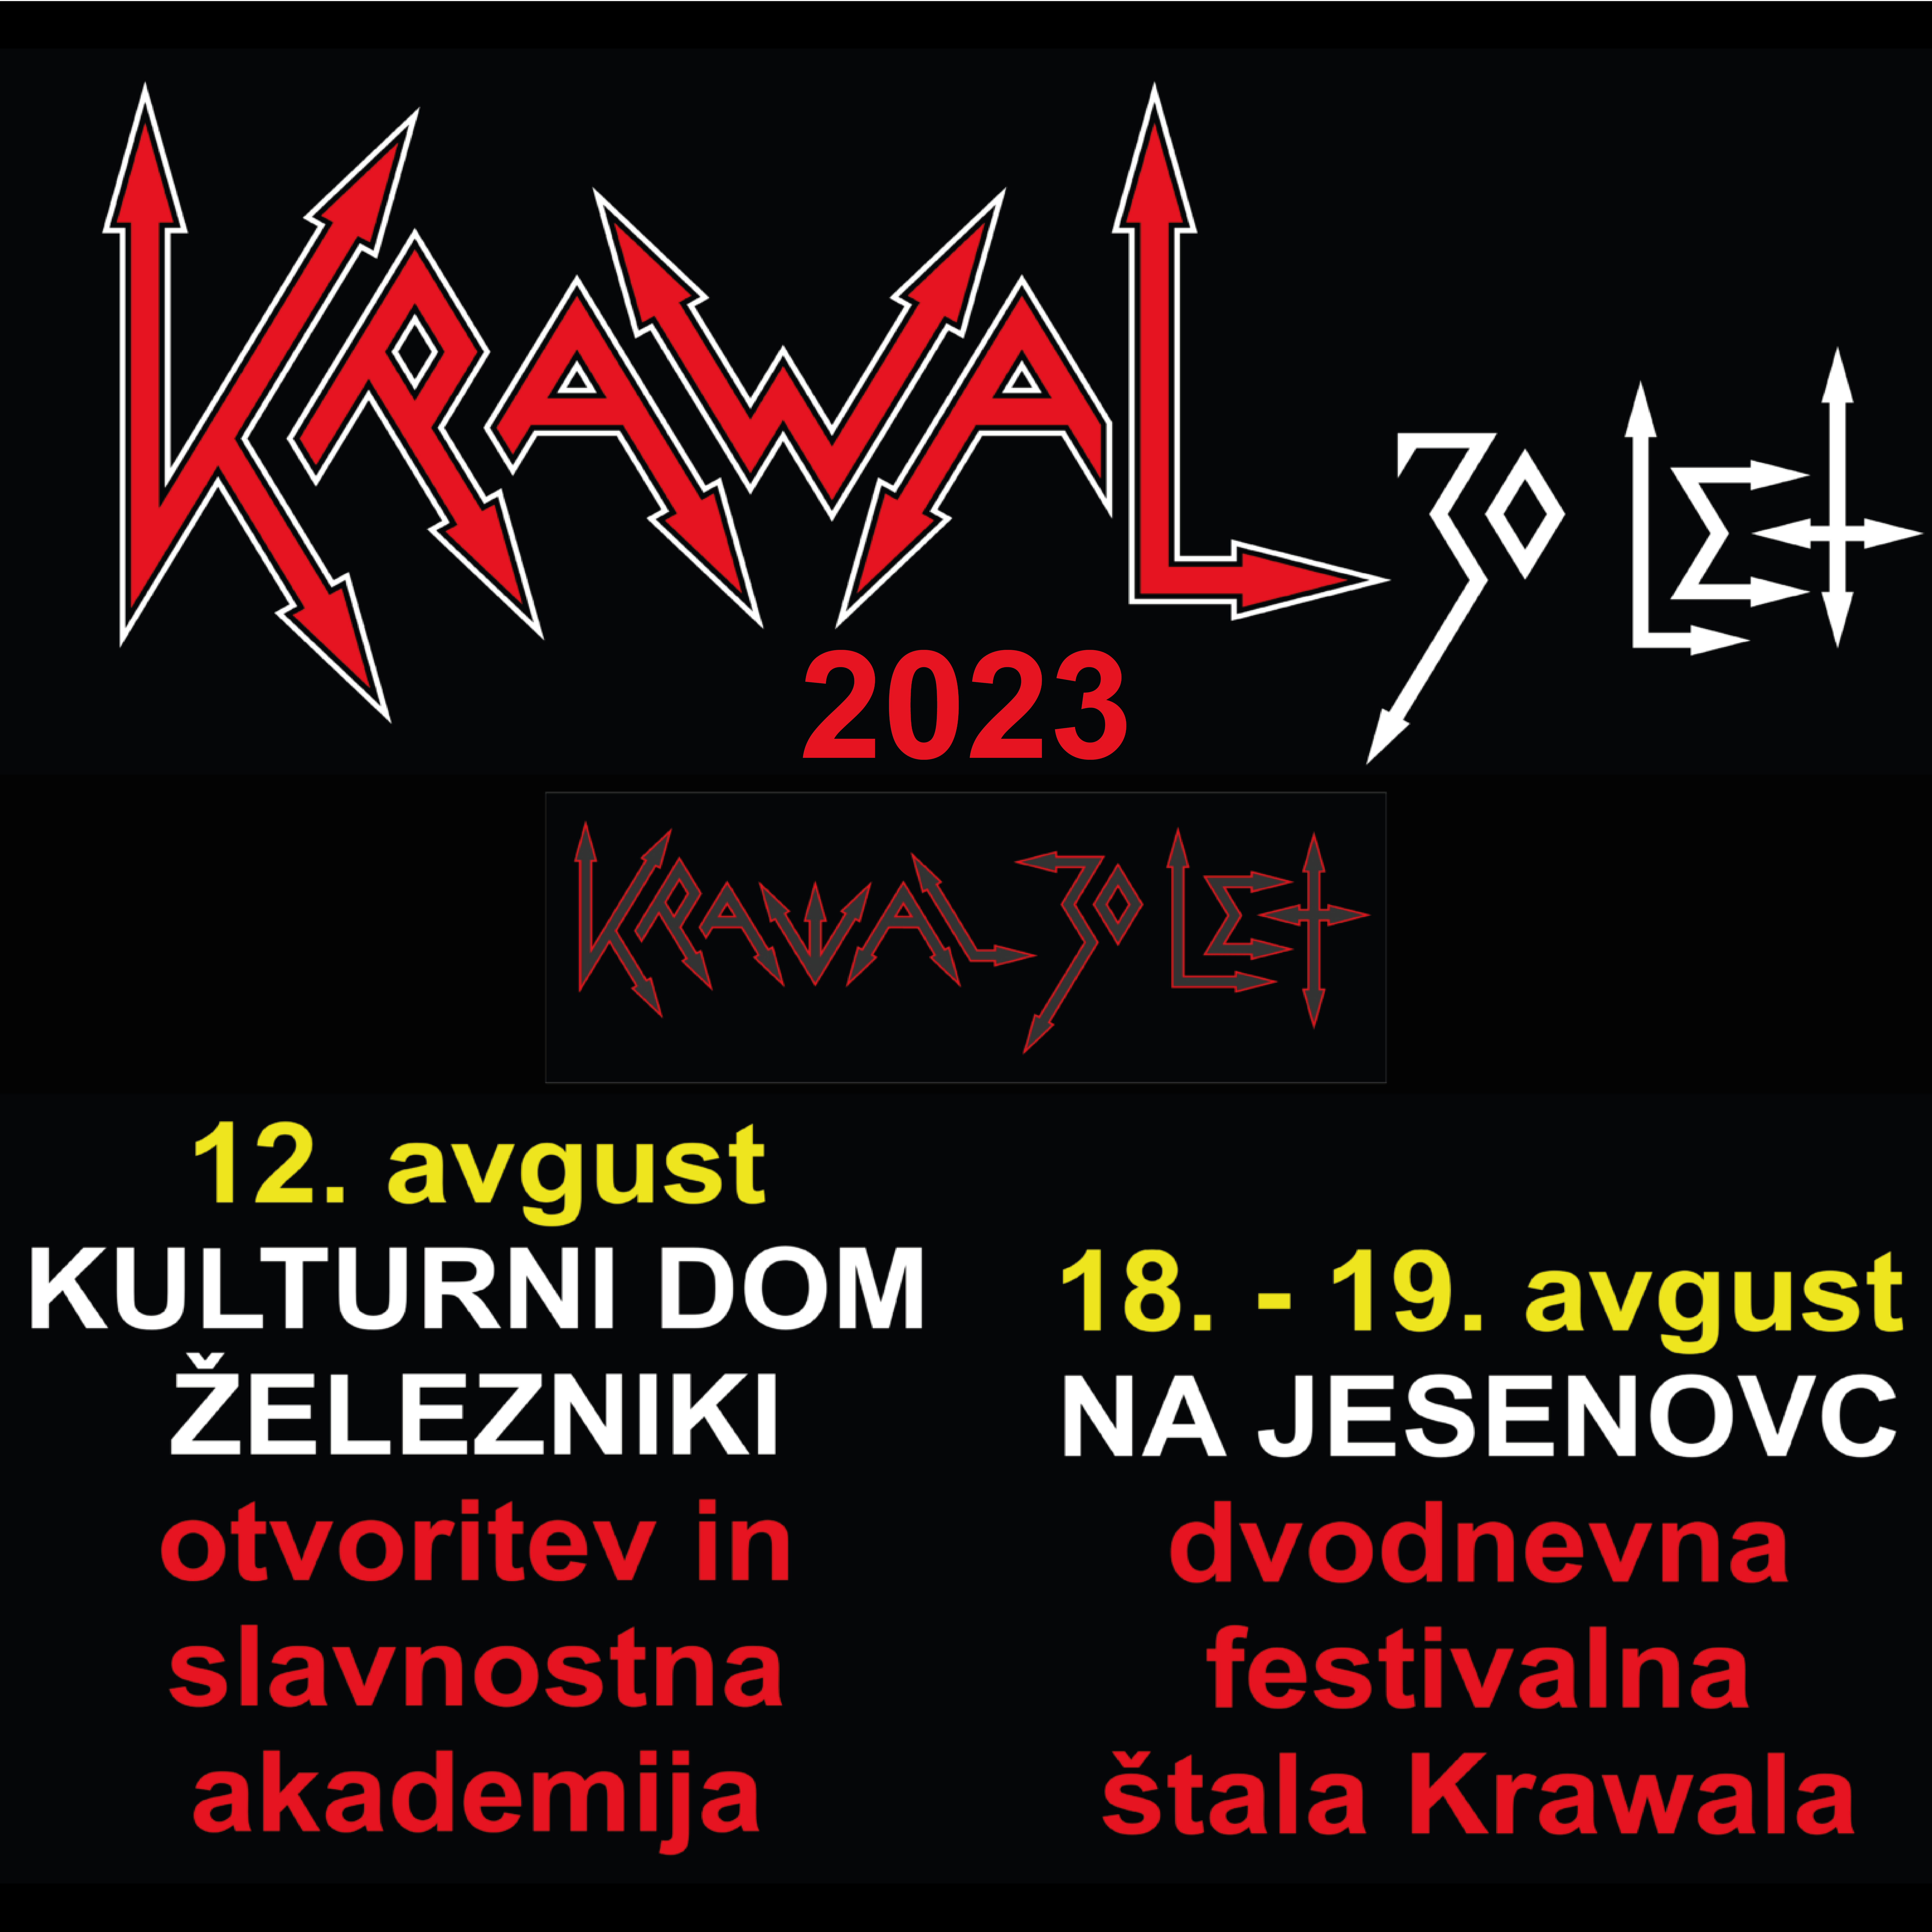 KRAWAL 2023